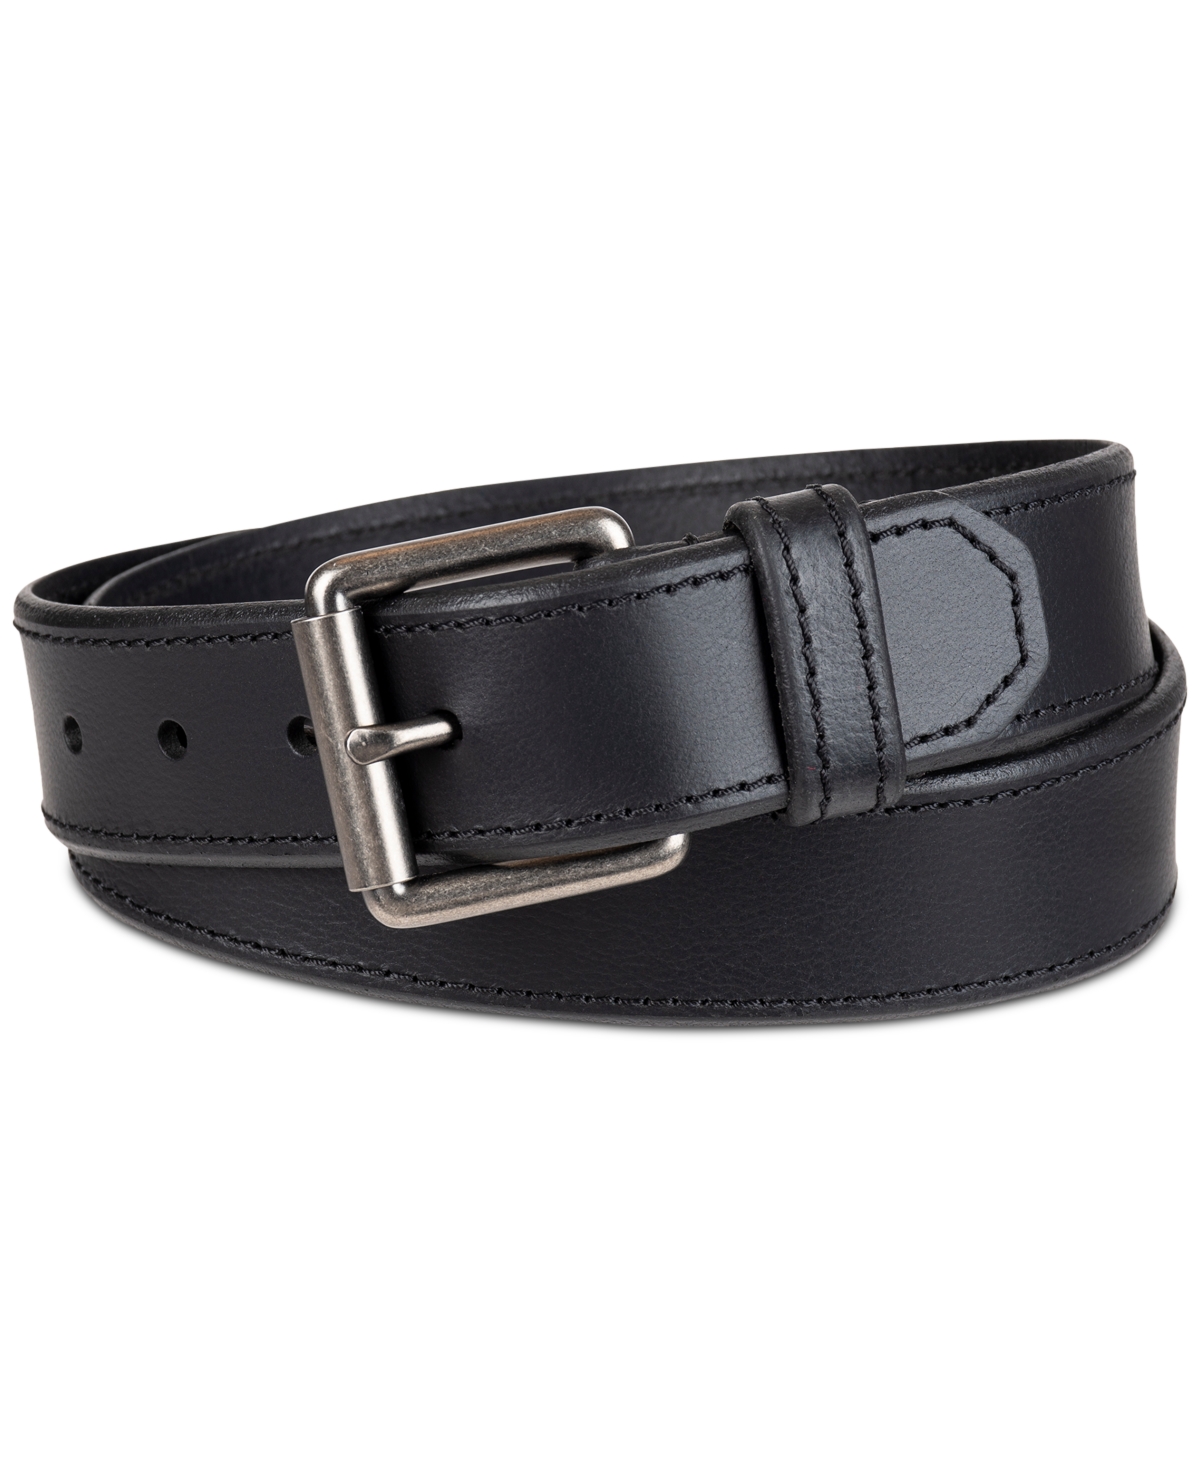 Men's Beveled-Edge Leather Belt - Black